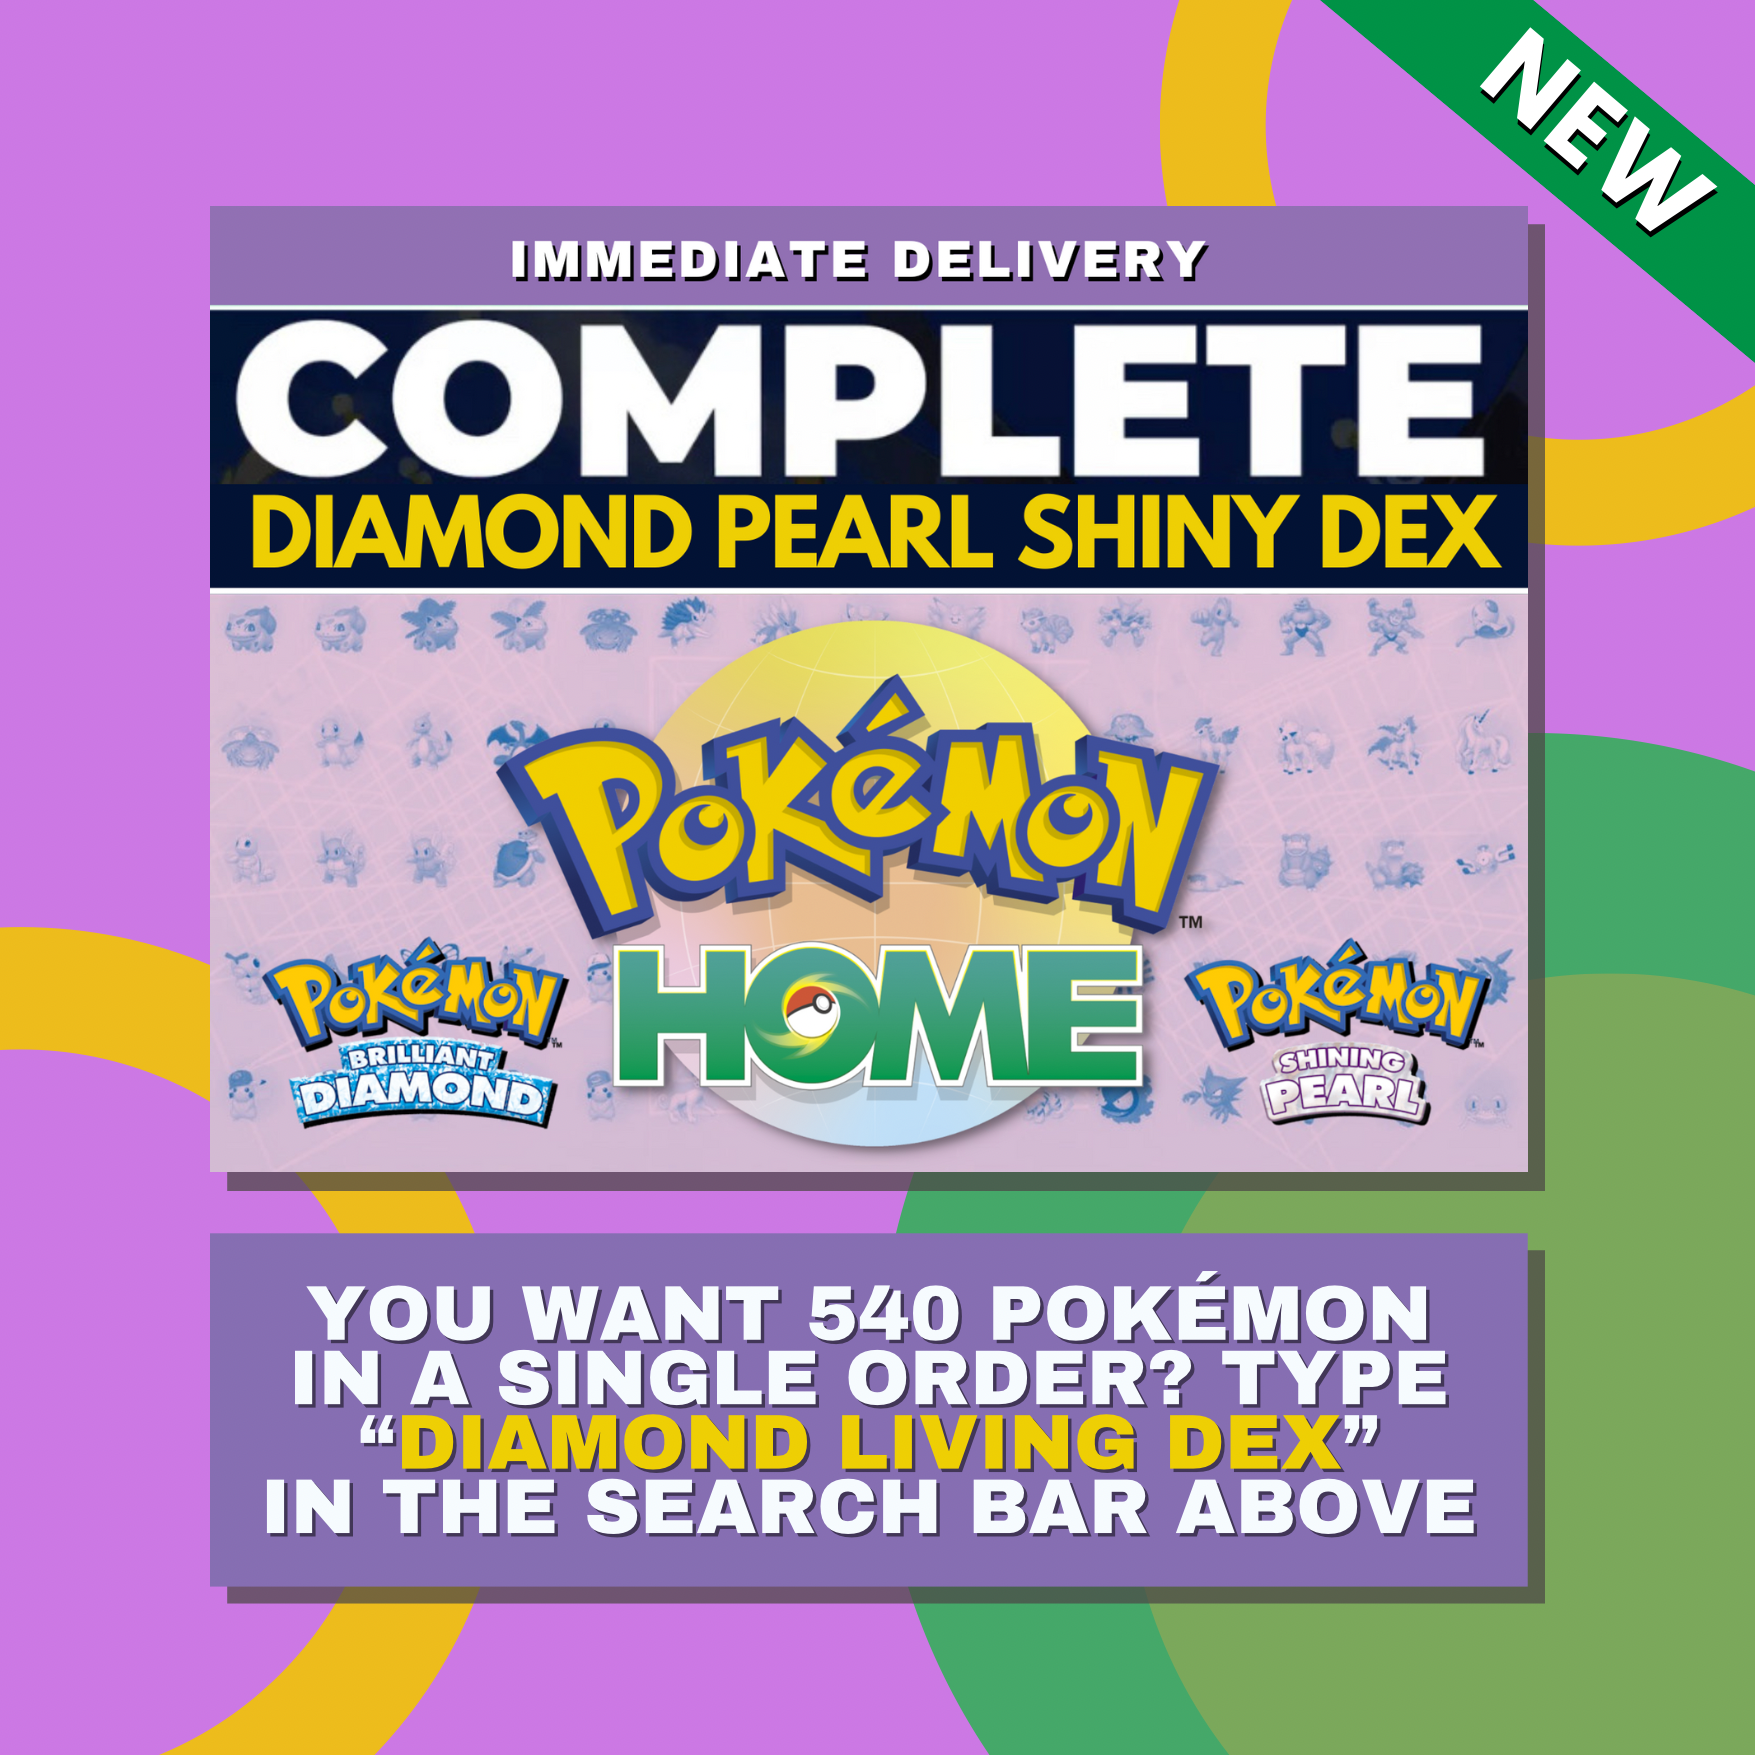 Deoxys Defense Form Shiny ✨ or Non Shiny Pokémon Brilliant Diamond Shining Pearl Battle Ready 6 IV Competitive 100% Legit Level 100 Customizable Custom OT by Shiny Living Dex | Shiny Living Dex